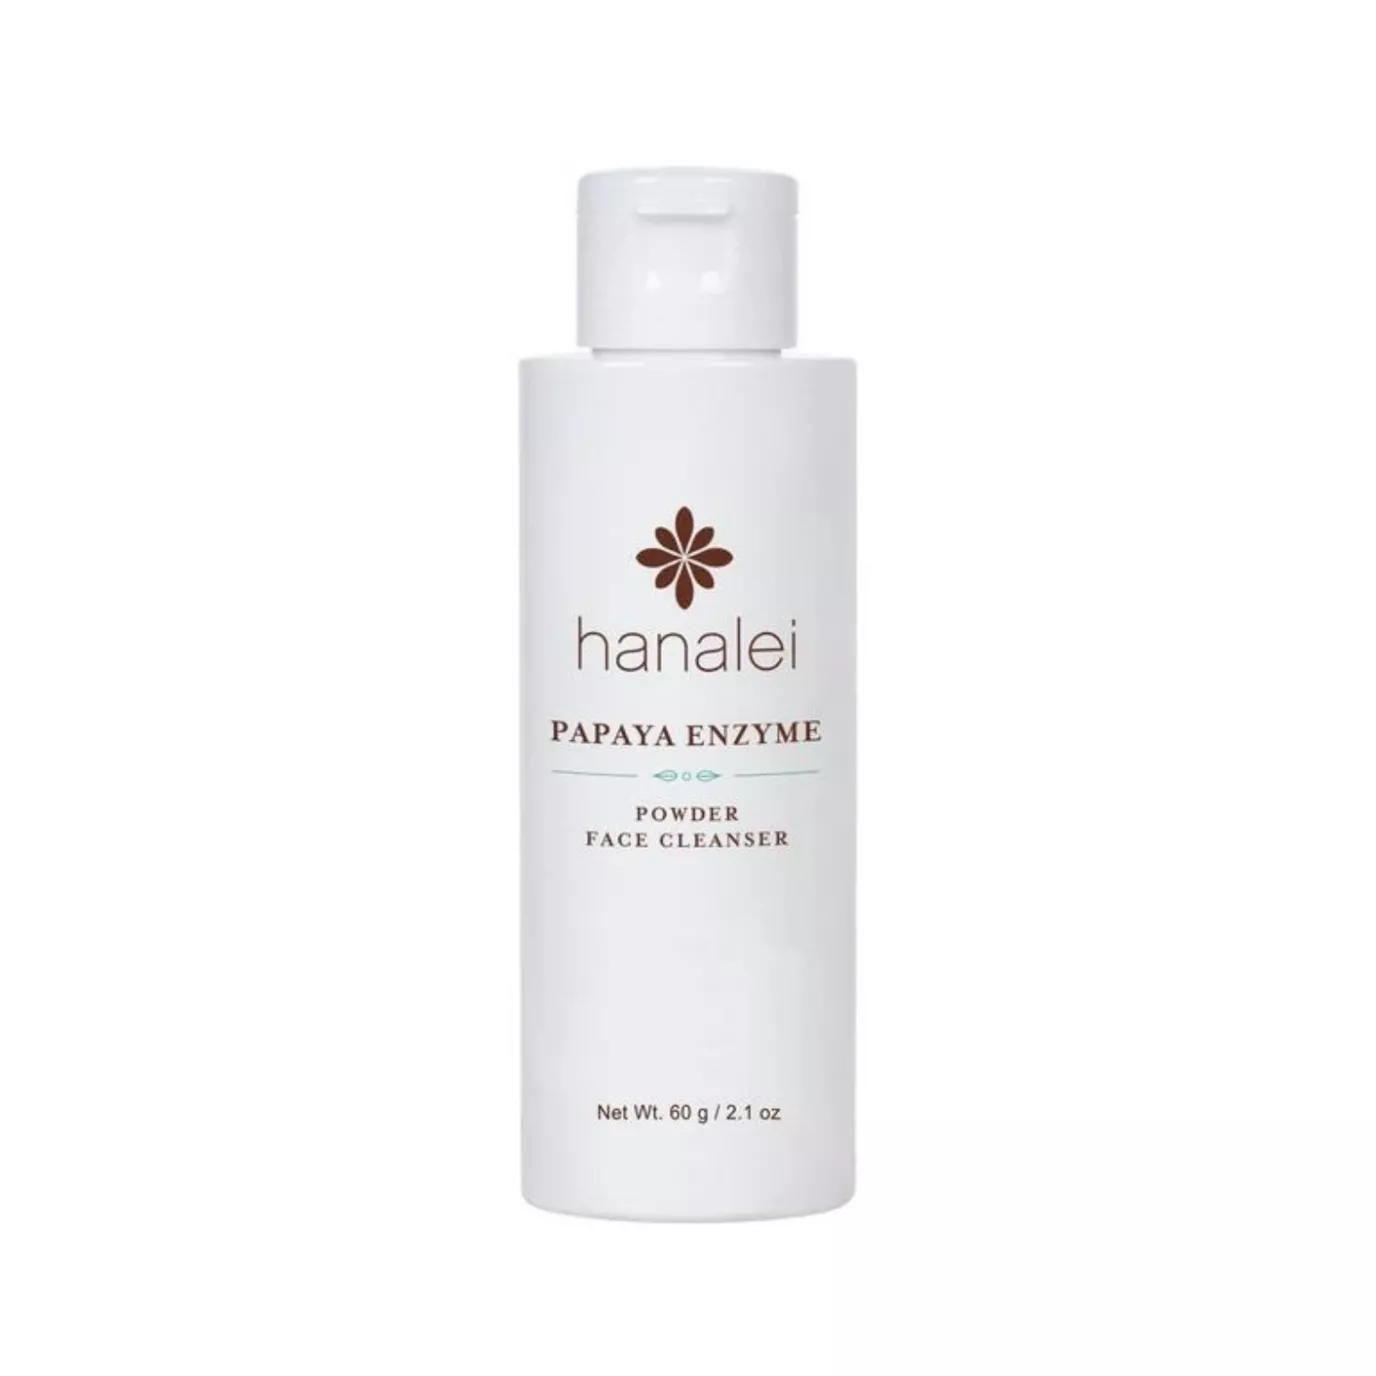 Hanalei Powder Face Cleanser